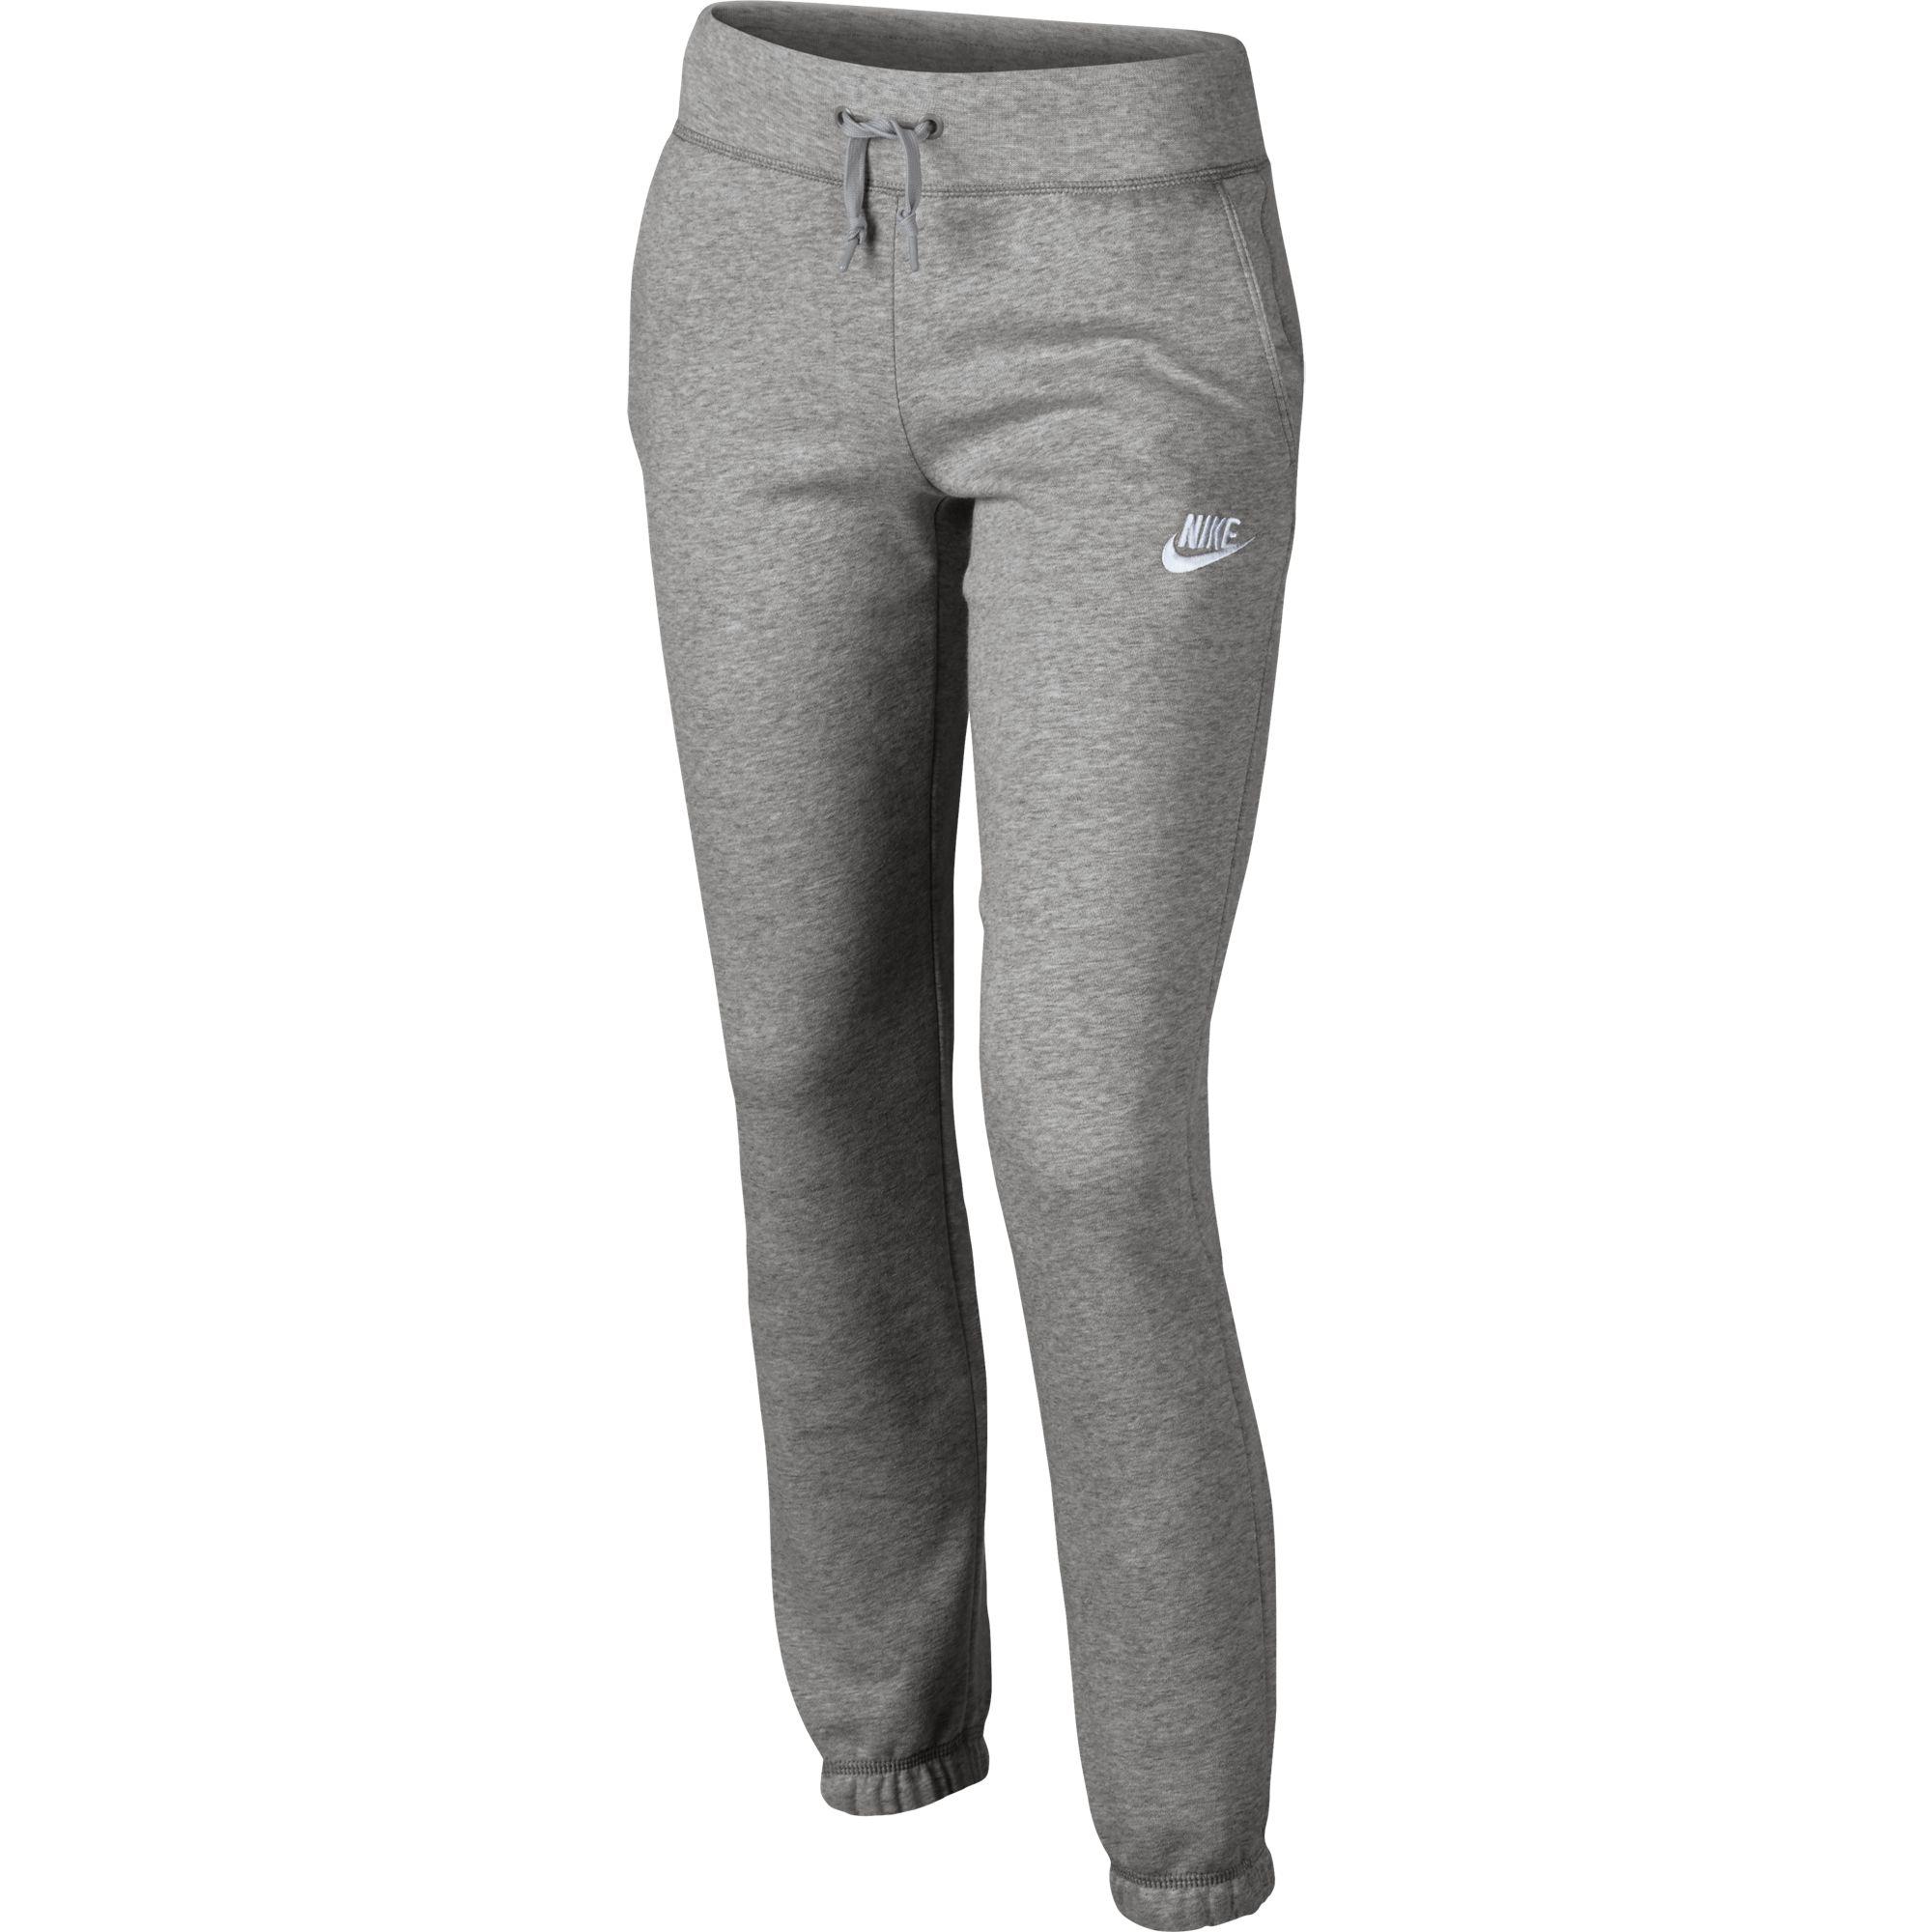 Nike Girls Sportswear Pants - Grey - Tennisnuts.com